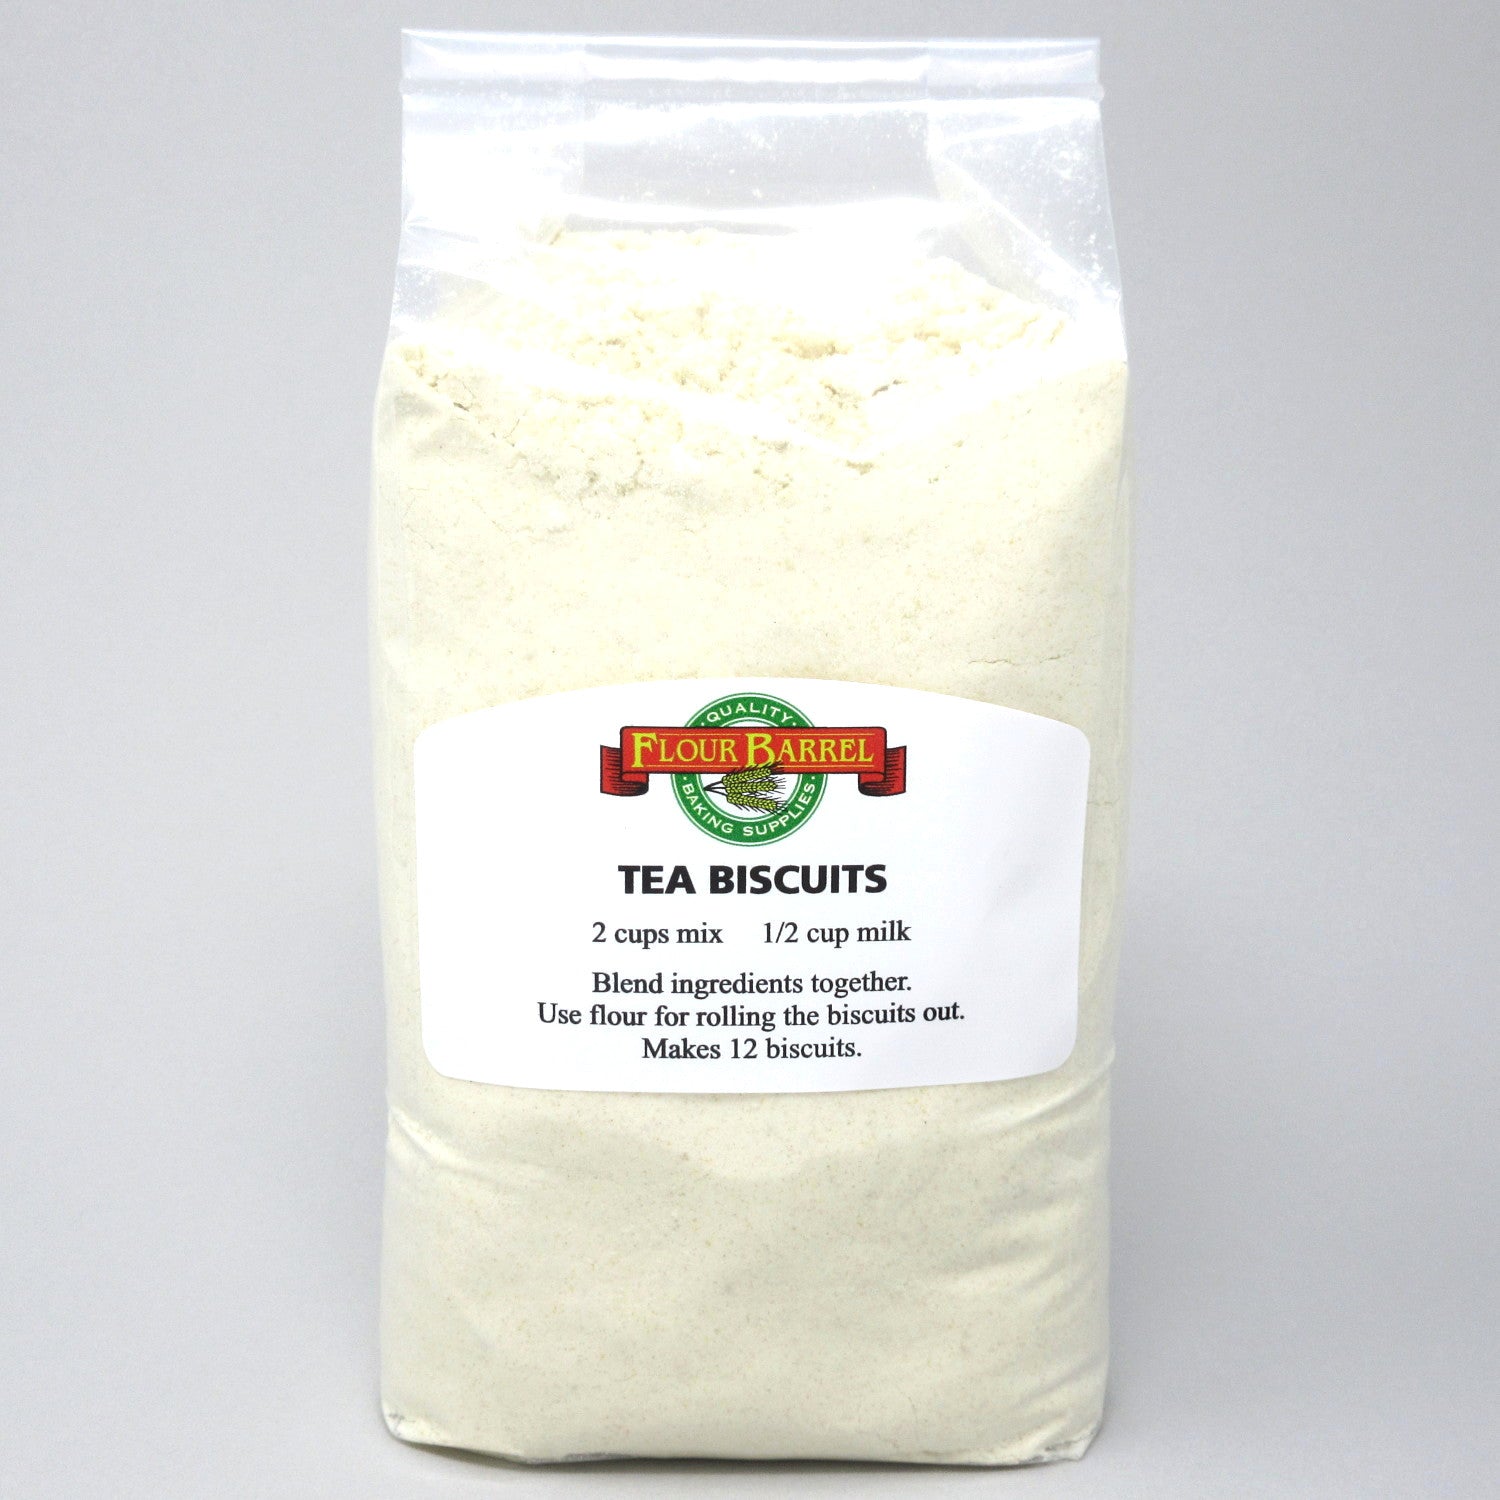 Flour Barrel product image - Tea Biscuits